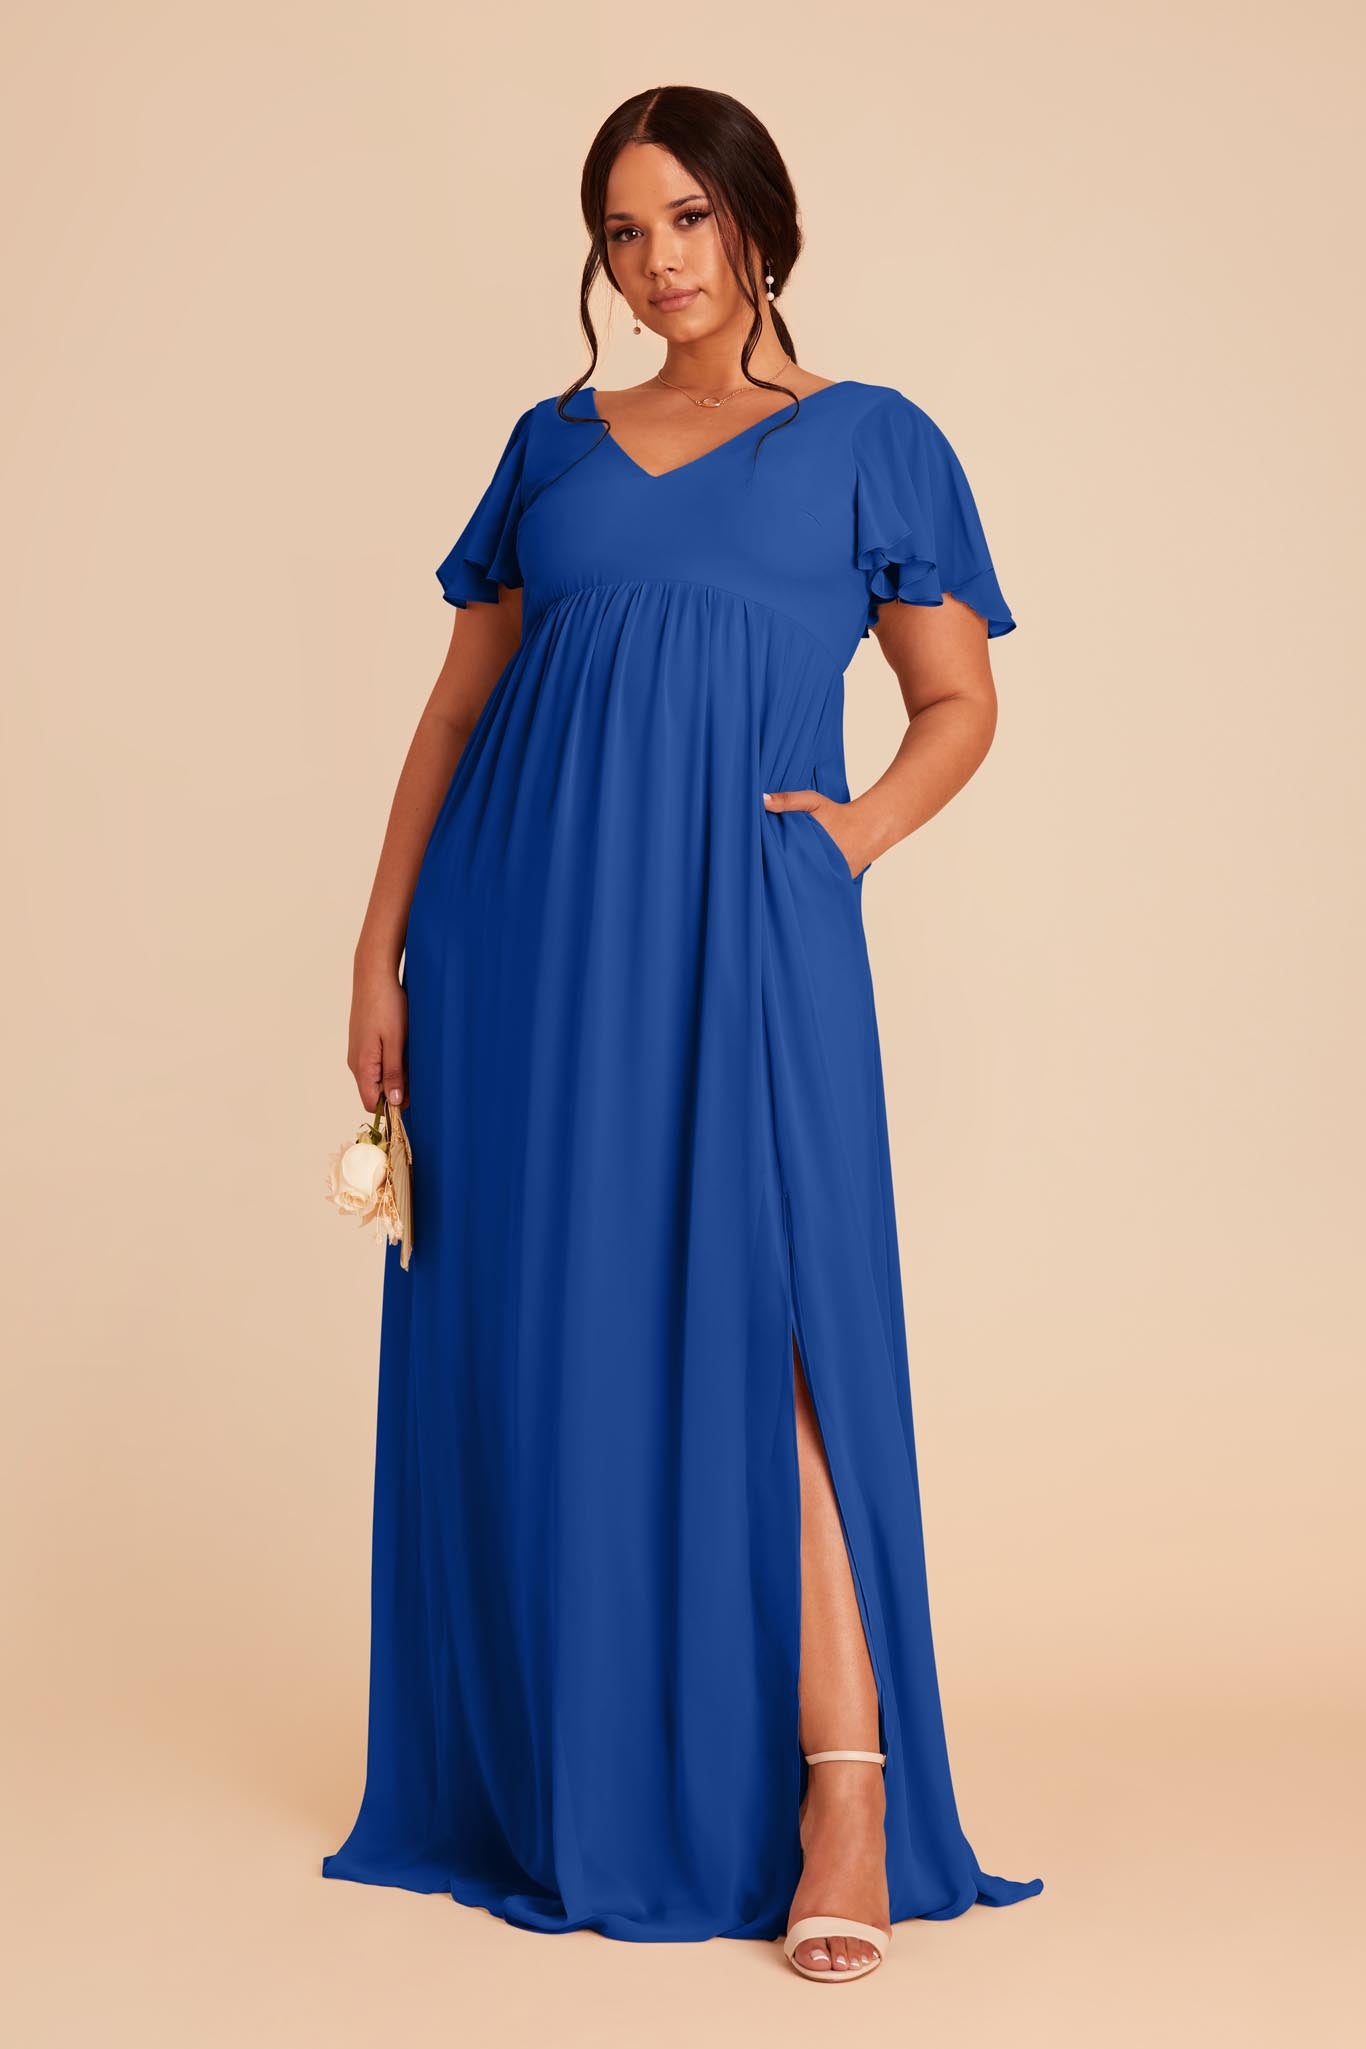 Hannah Empire Bridesmaid Dress in Cobalt Blue | Birdy Grey